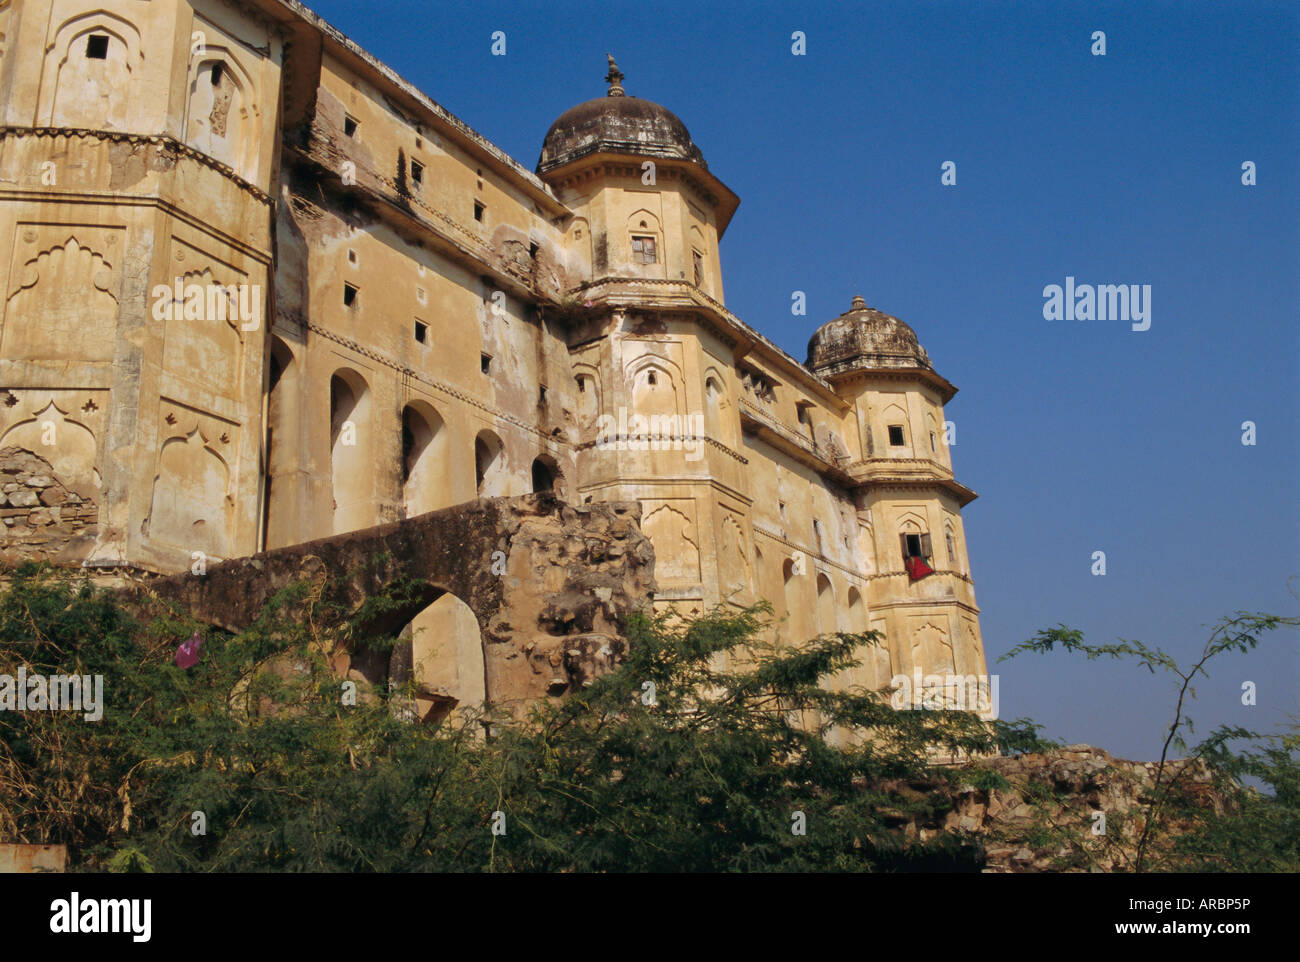 Amber Palace and Fort built in 1592 by Maharajah Man Singh, Jaipur, Rajasthan, India Stock Photo